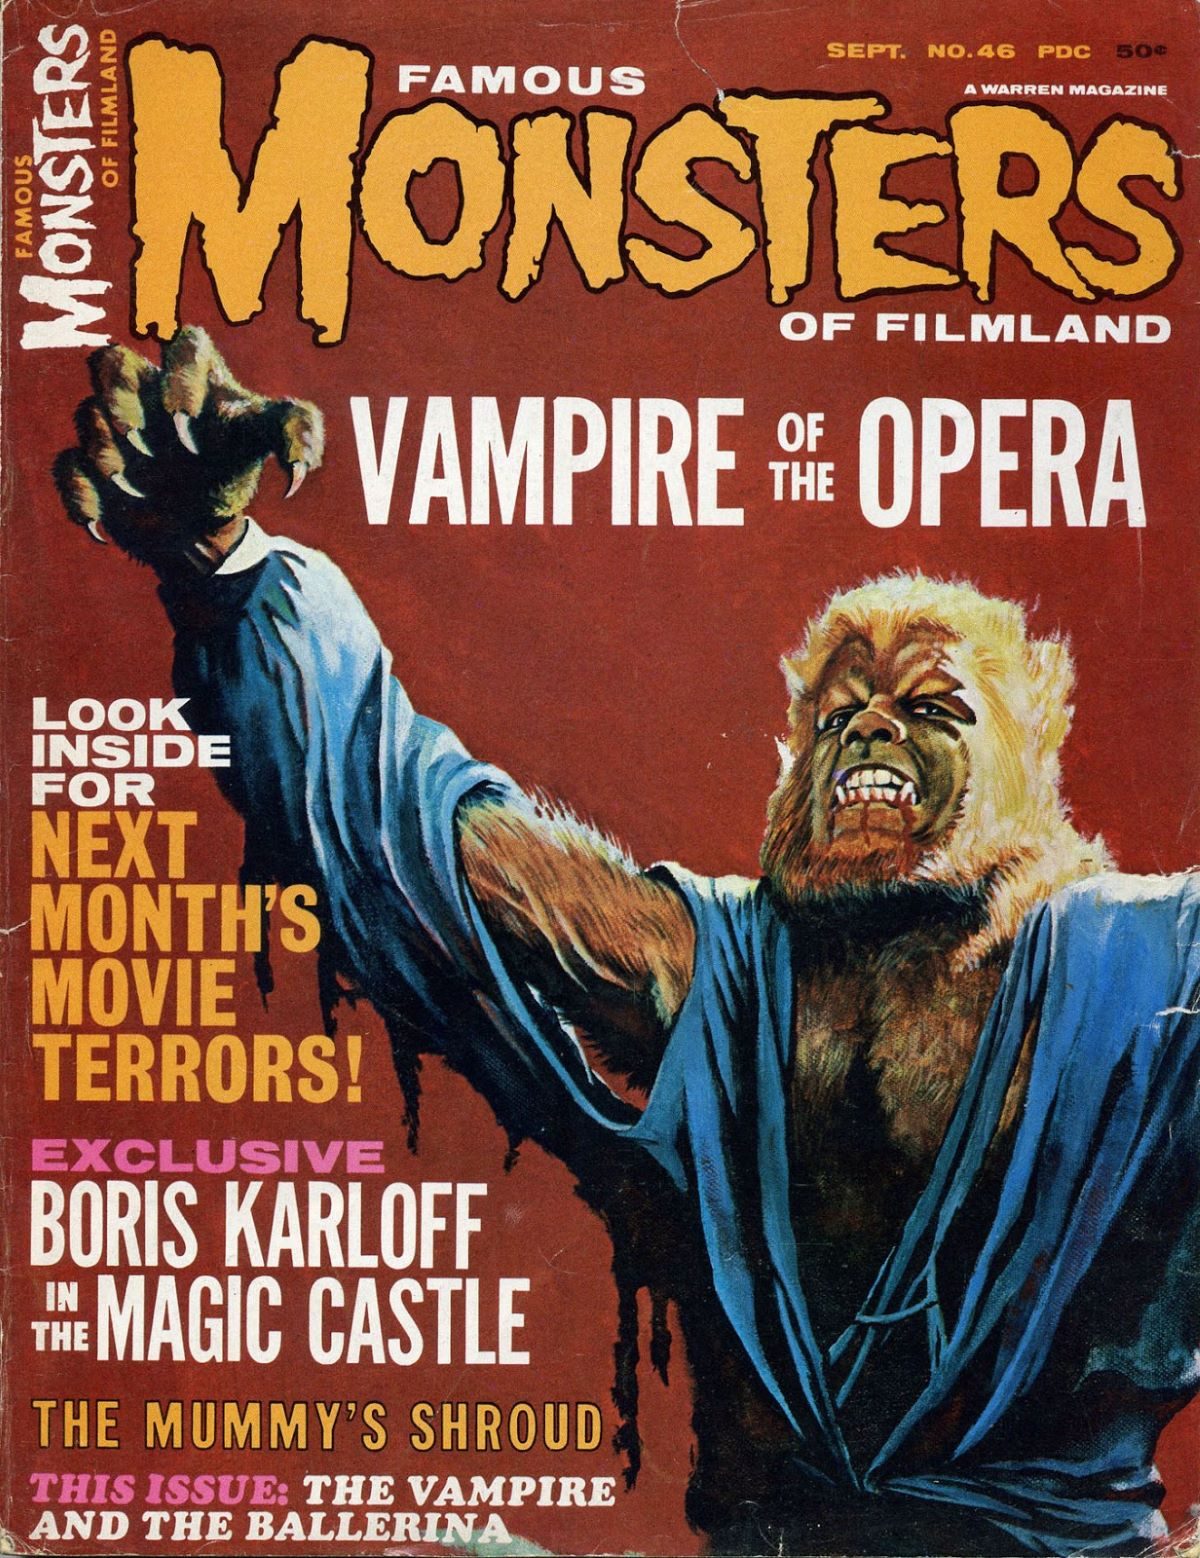 Famous Monsters of Filmland, magazine, horror films, Oliver Reed, werewolf